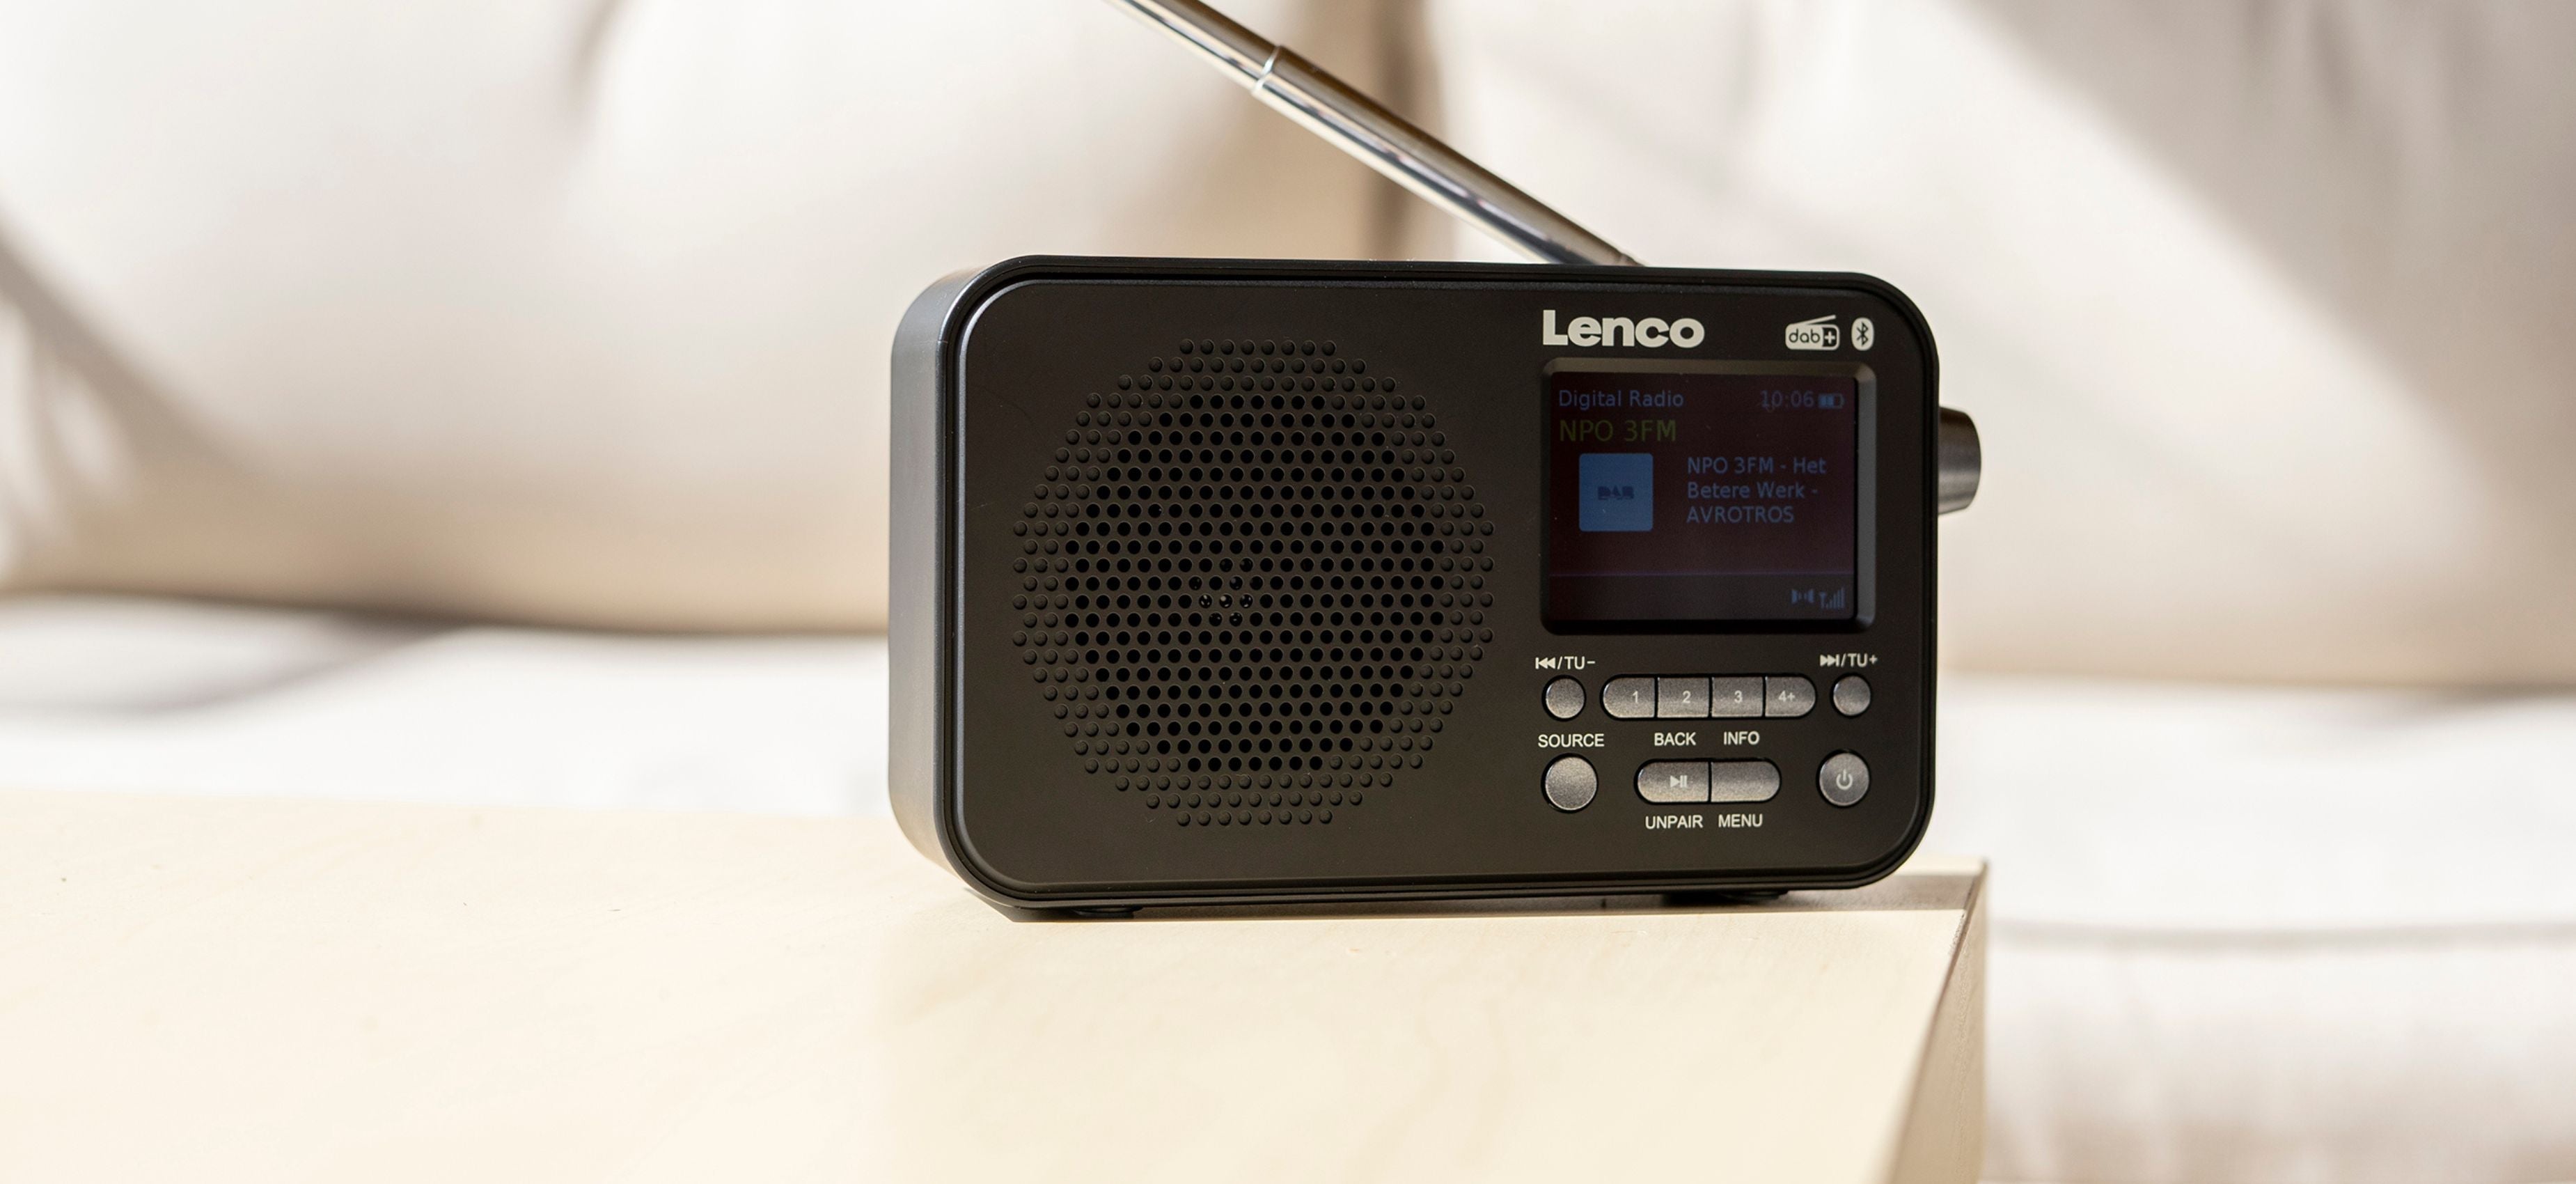 | Lenco Official the Lenco Bluetooth Shop Now in radios